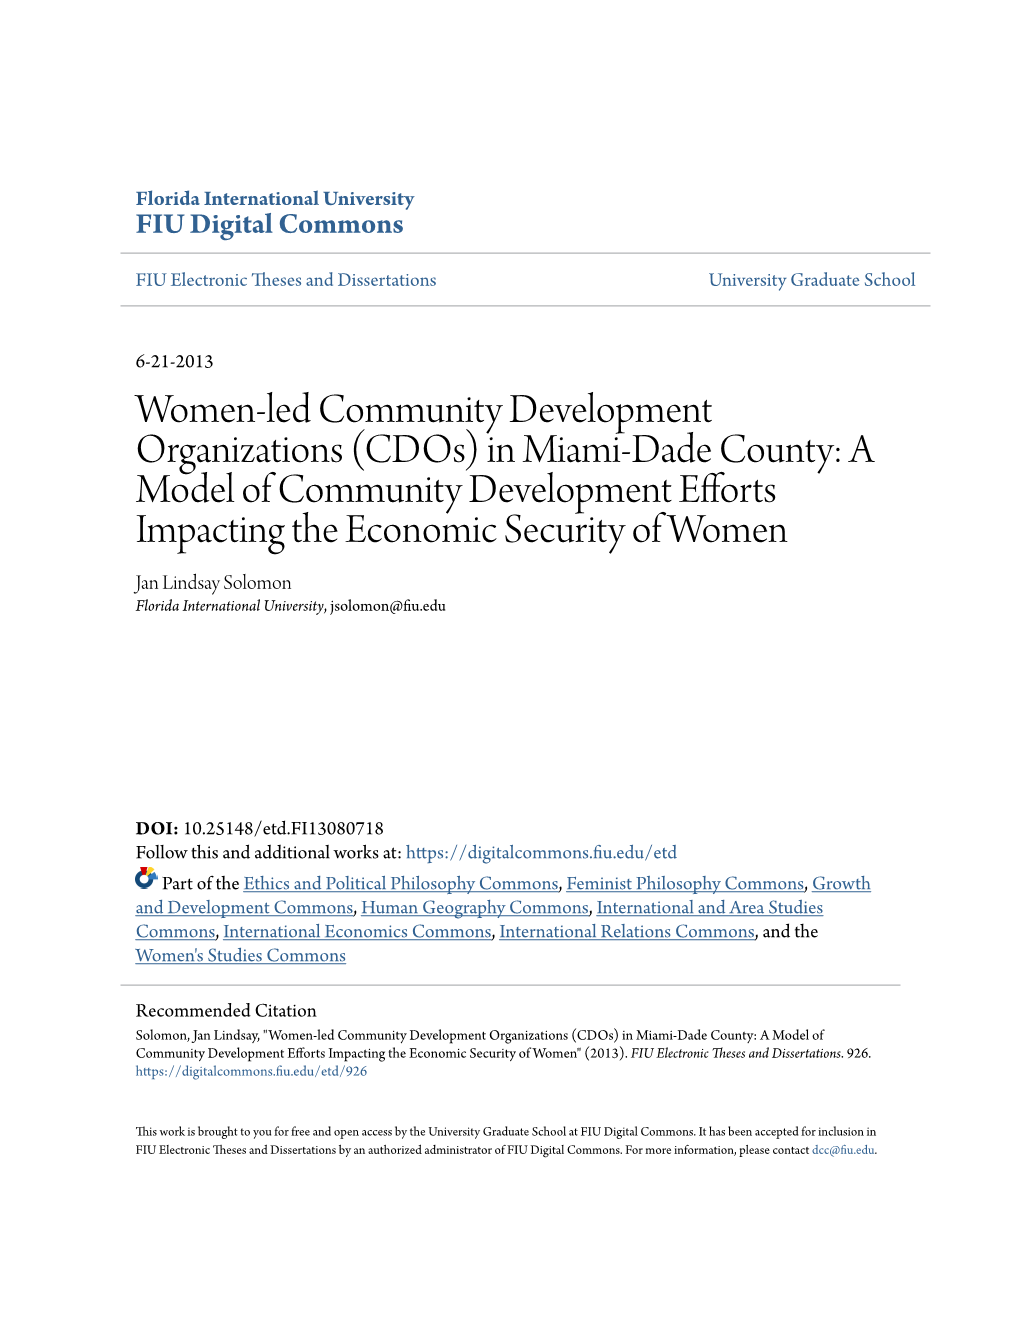 Women-Led Community Development Organizations (Cdos) In